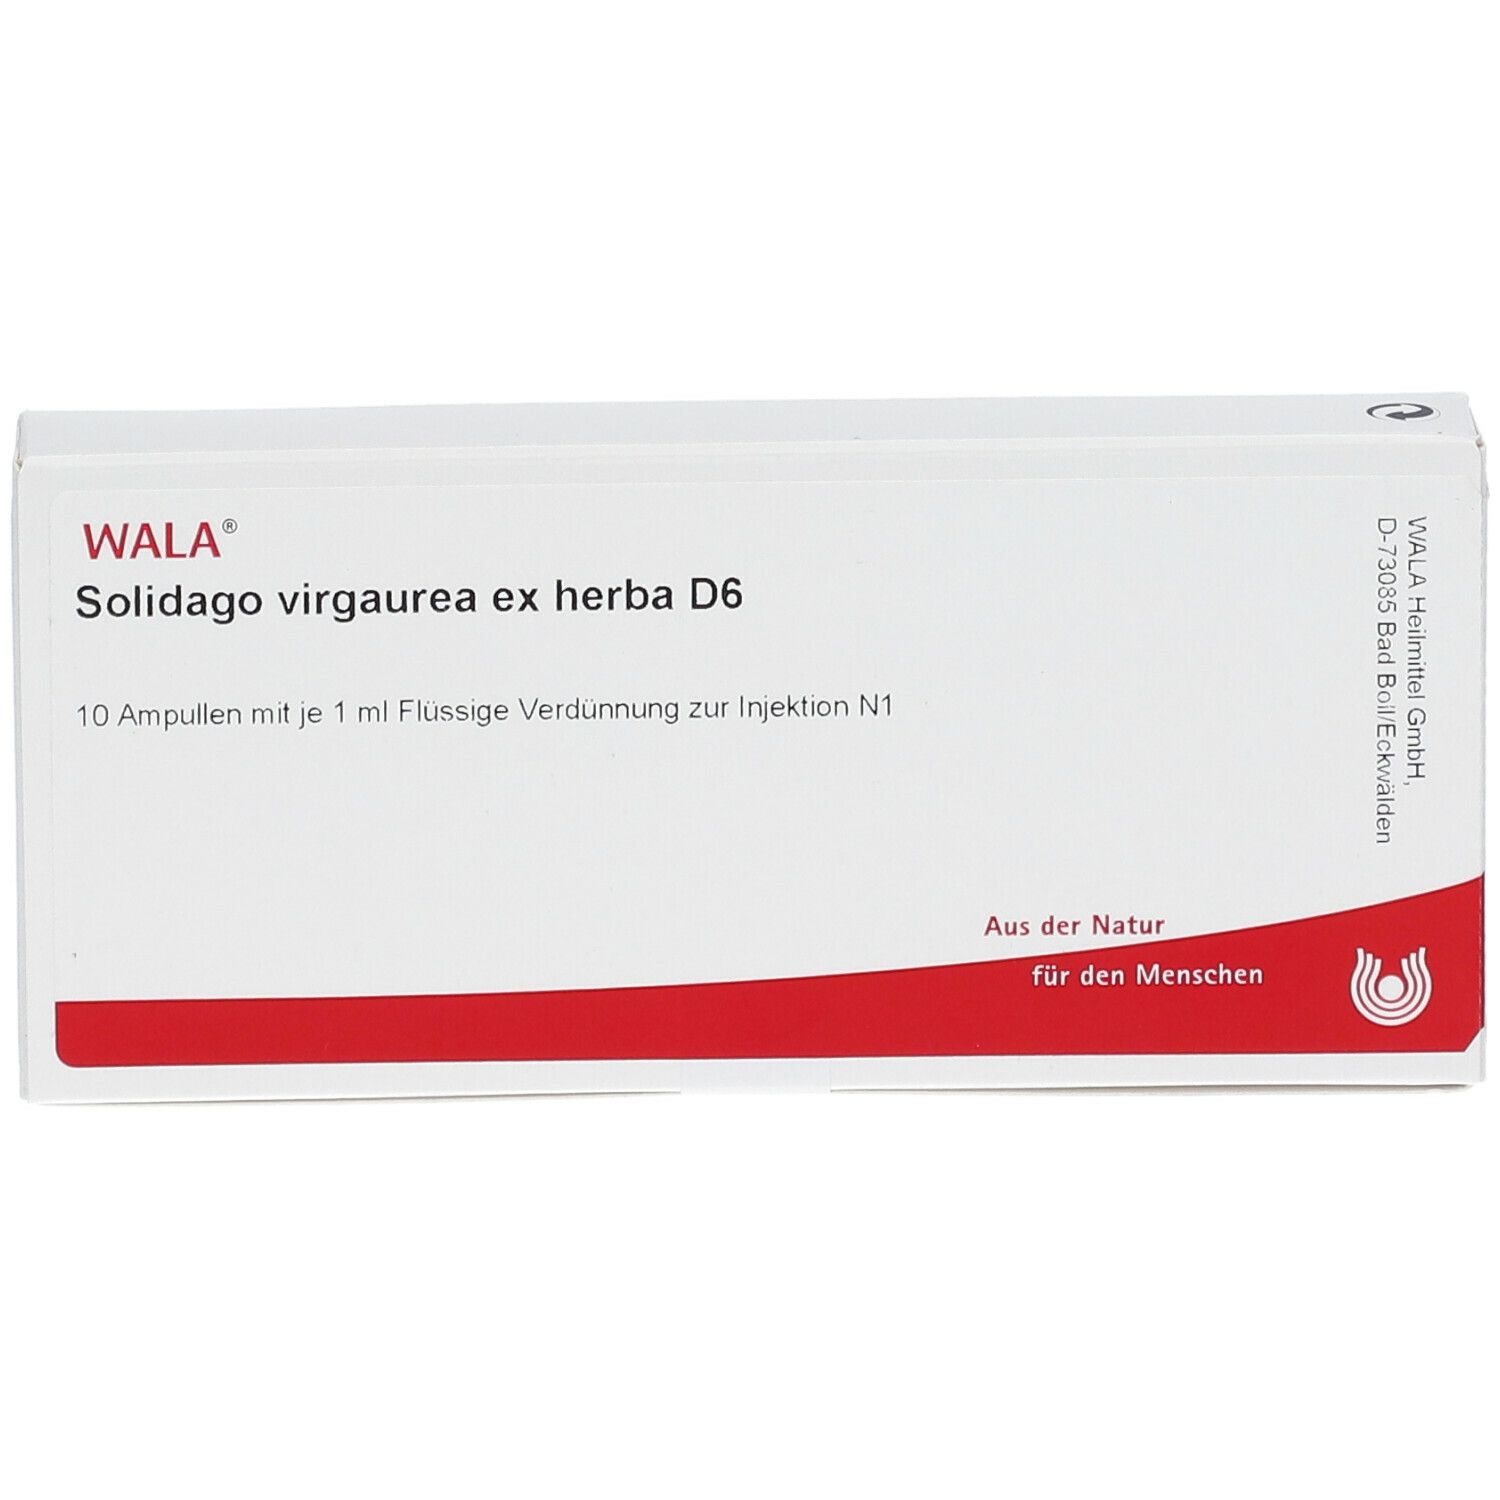 WALA® Solidago virgaurea ex herba D 6